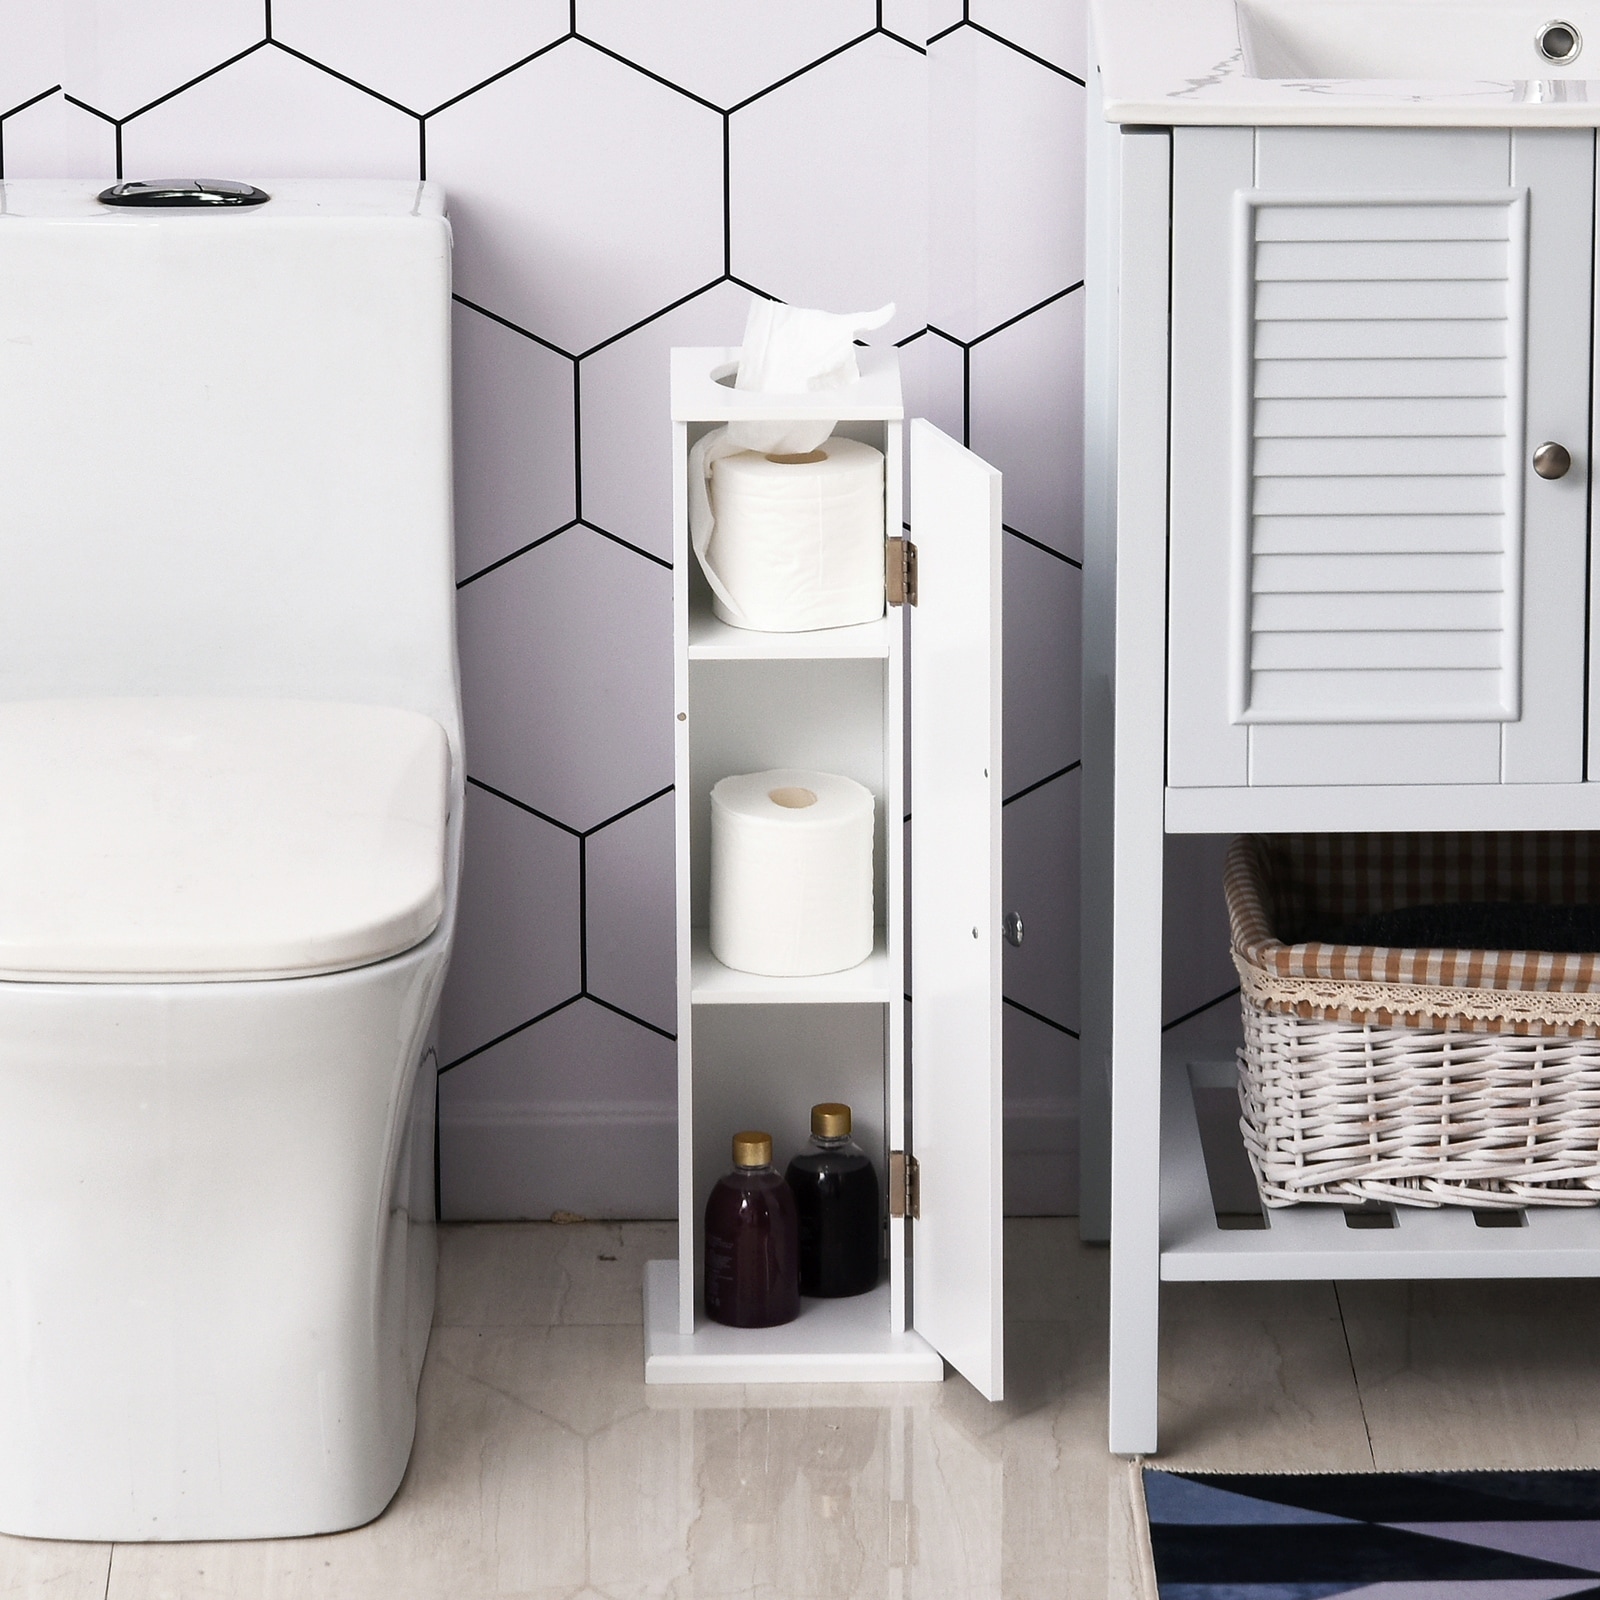 Space Saver Bathroom Storage Cabinet in White - Bed Bath & Beyond